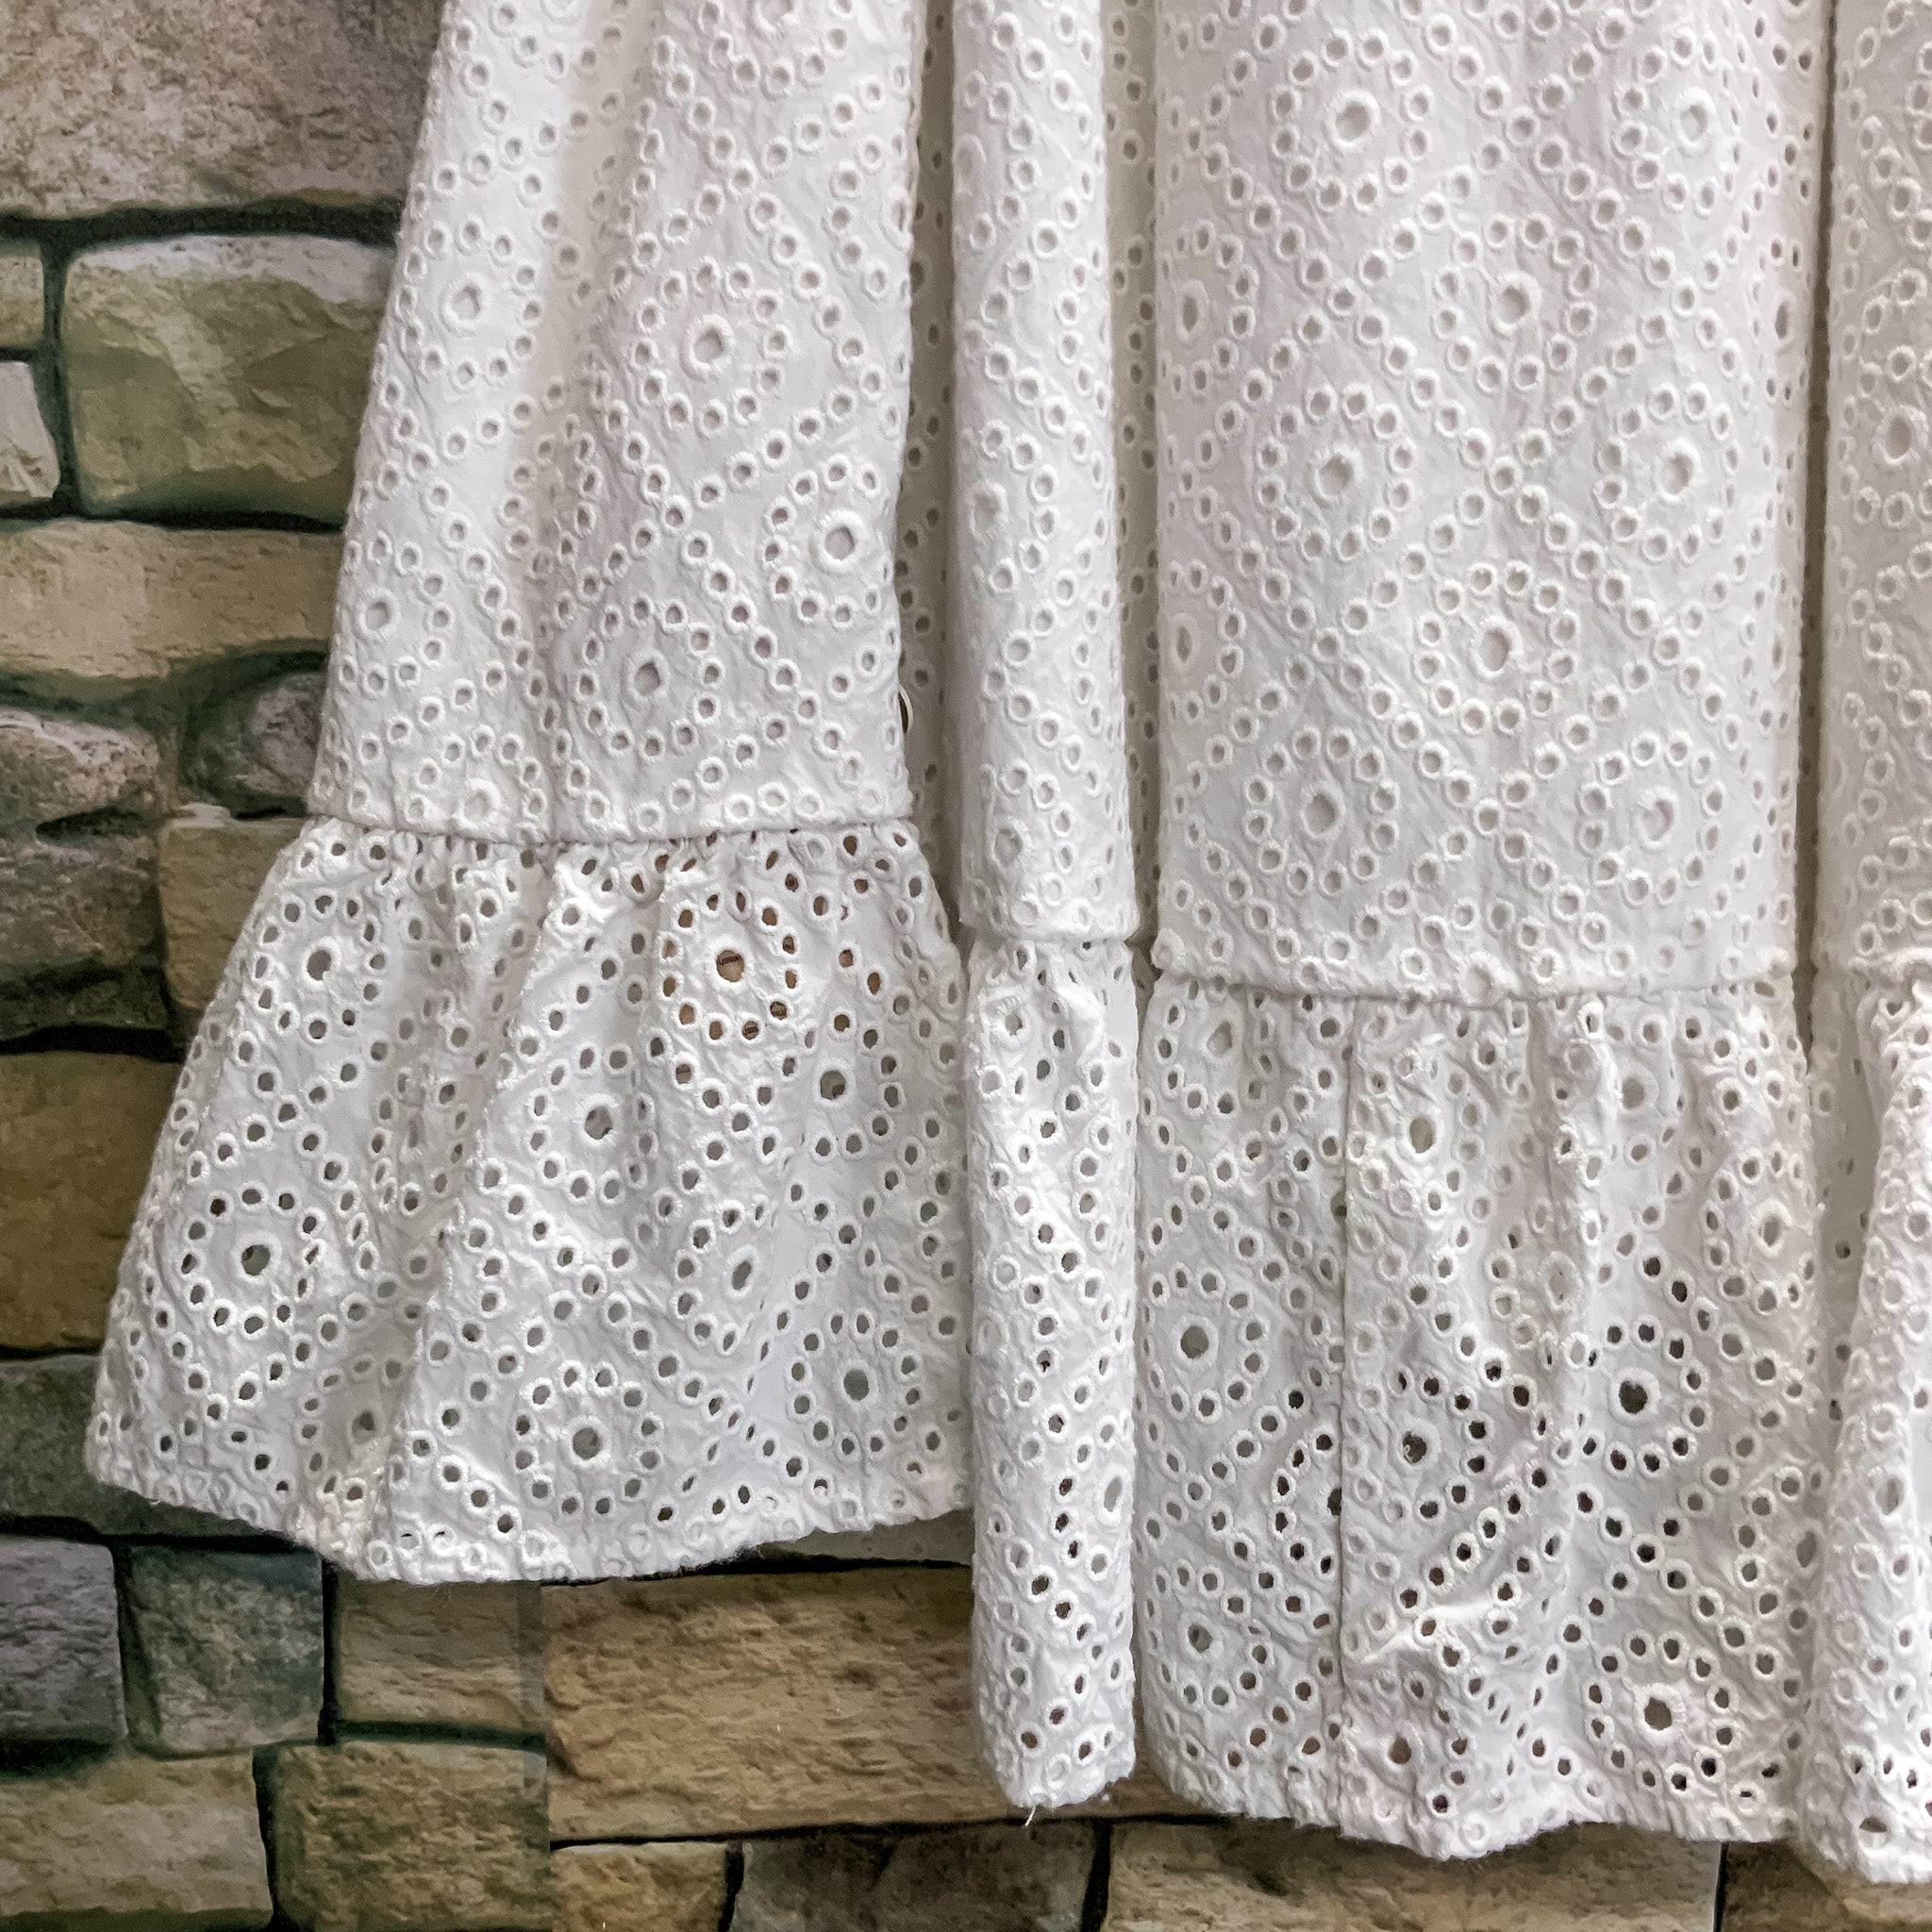 SCOTCH & SODA 'Broderie Anglais' White Cotton Lace Wrap Dress - Size L